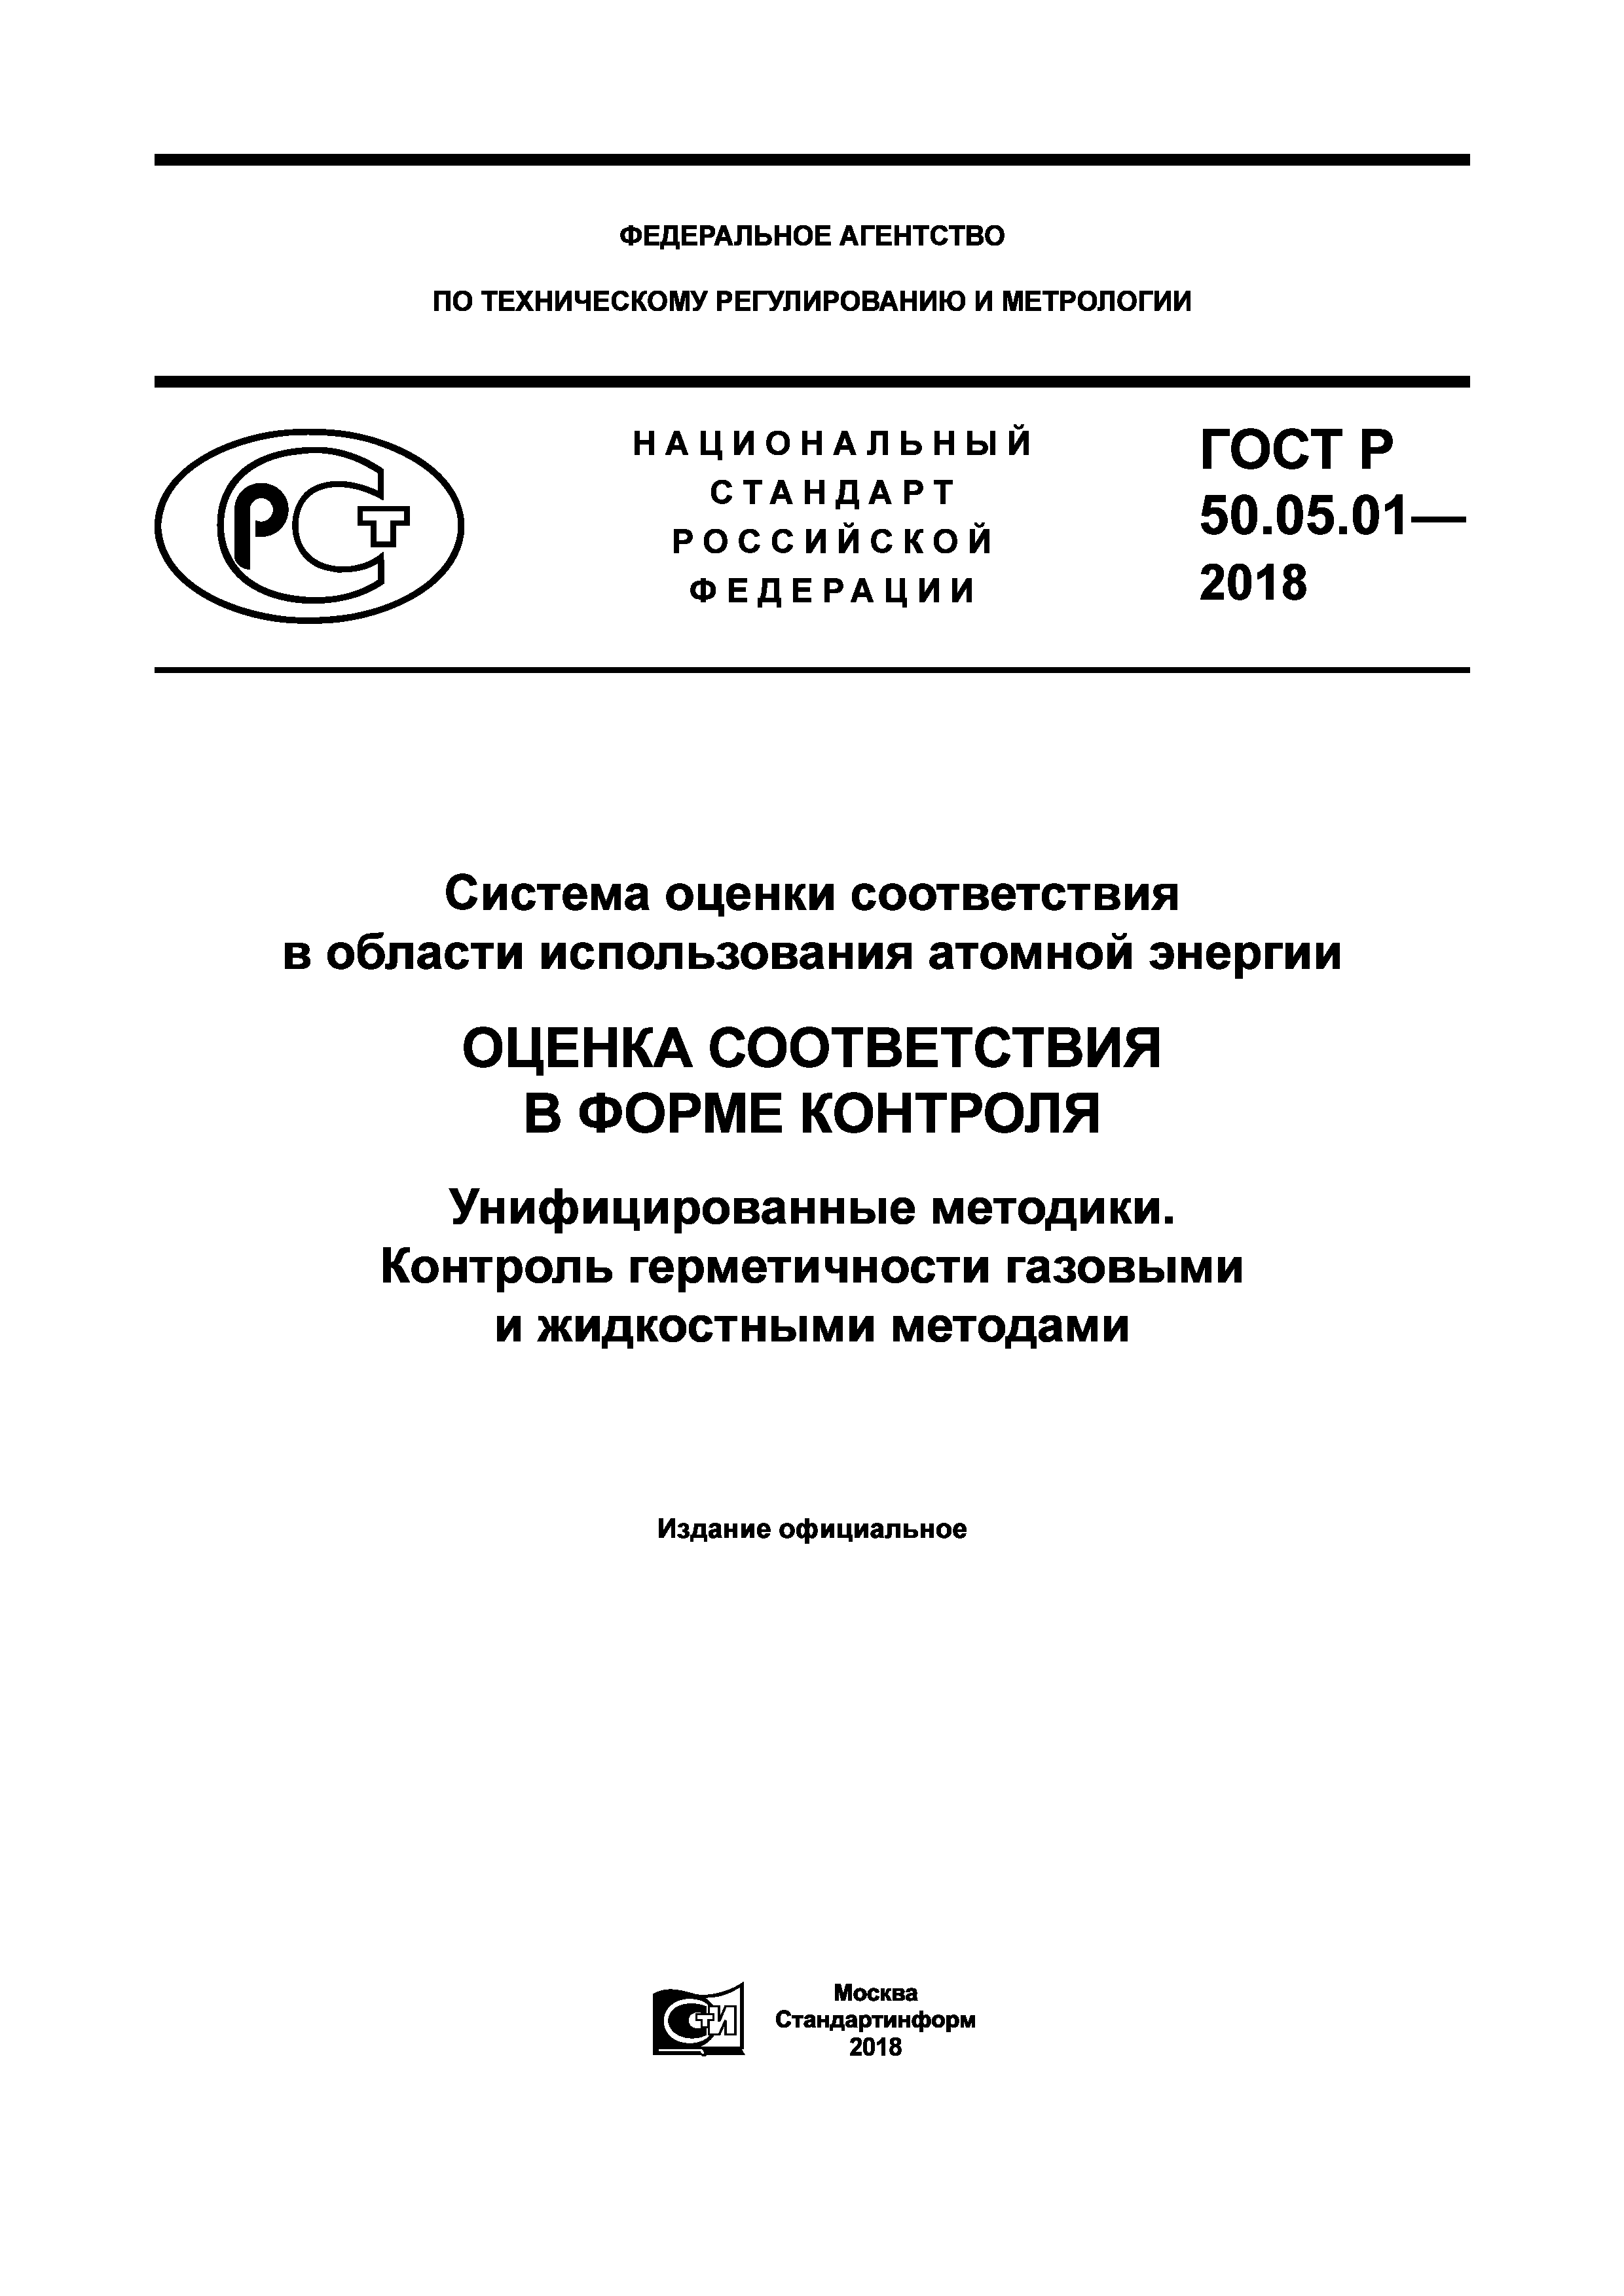 ГОСТ Р 50.05.01-2018